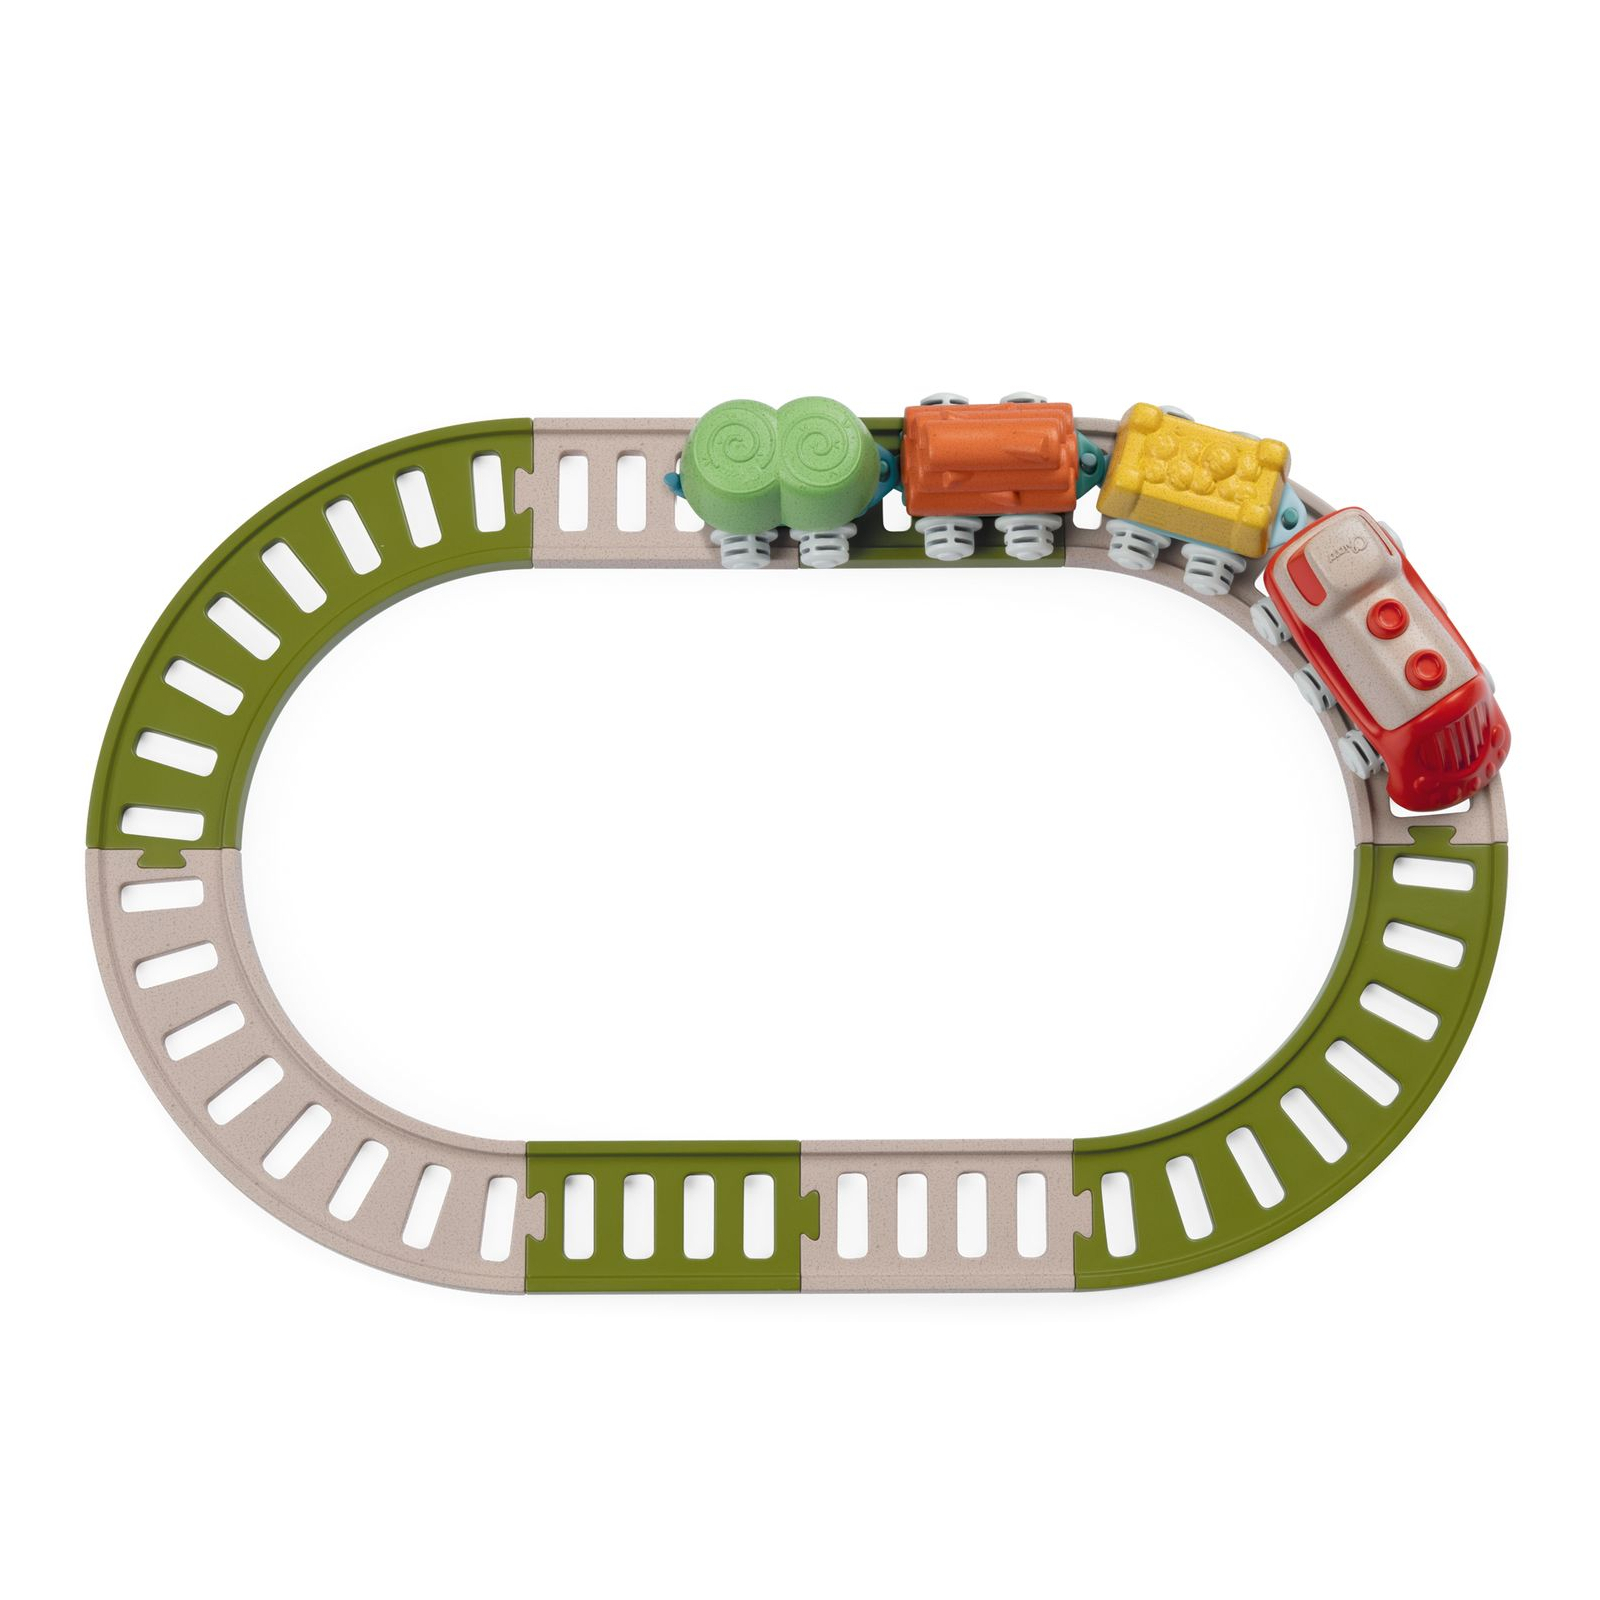 Железная дорога Chicco Eco+ Детская железная дорога (11543.00) изображение 2